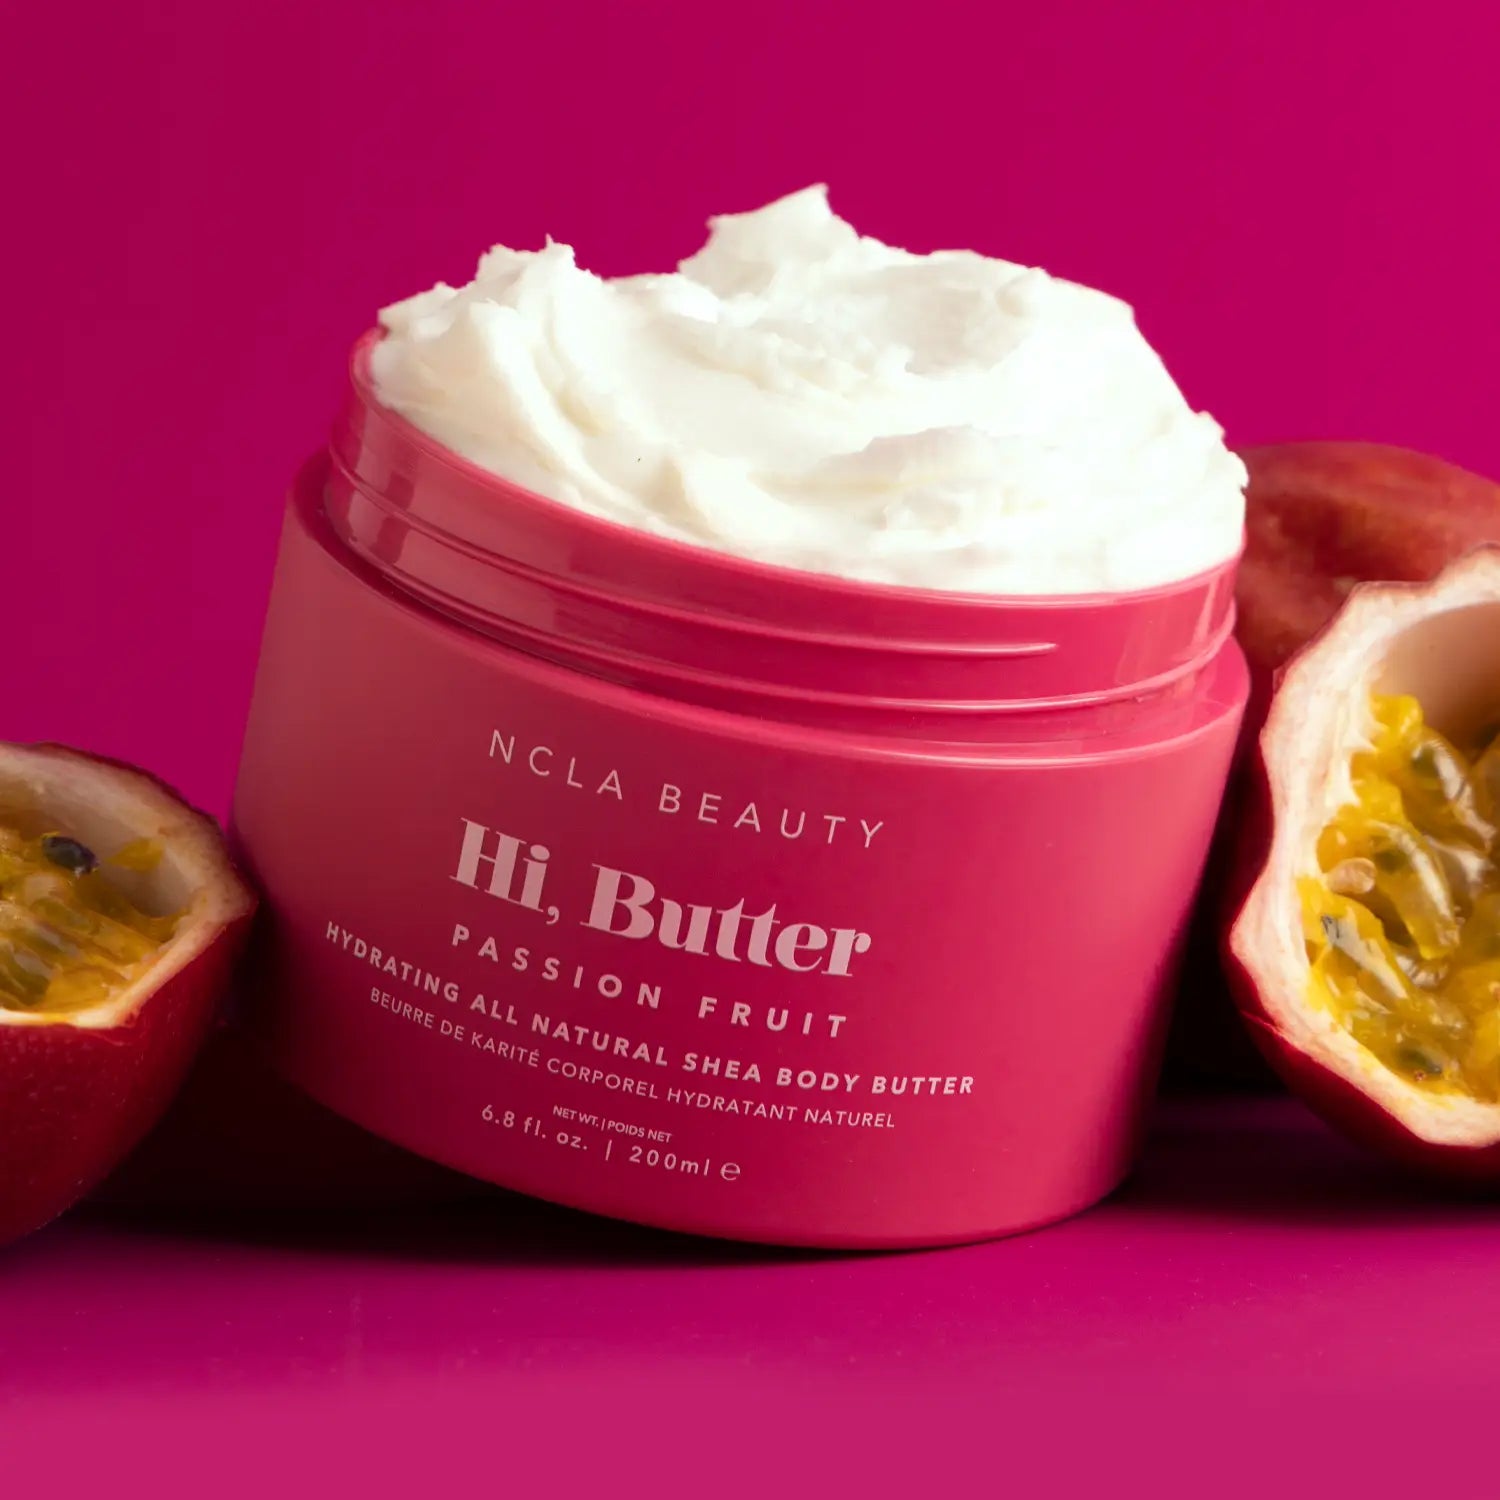 NCLA Beauty - Hi, Butter Body Butter - Passion Fruit